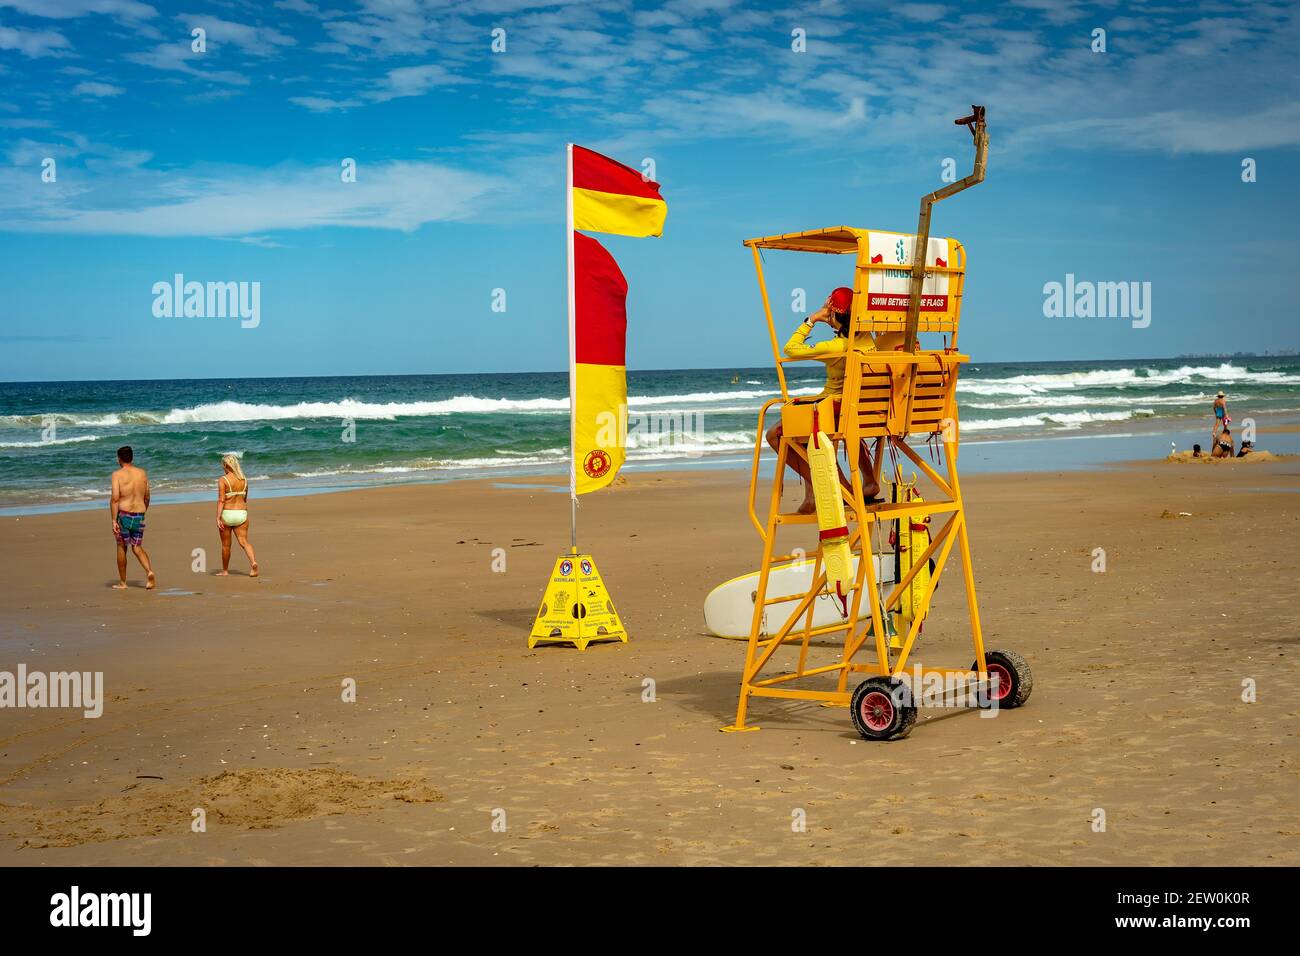 Surfers Paradise, Gold Coast, Australia - Lifeguard's beach box Stock Photo